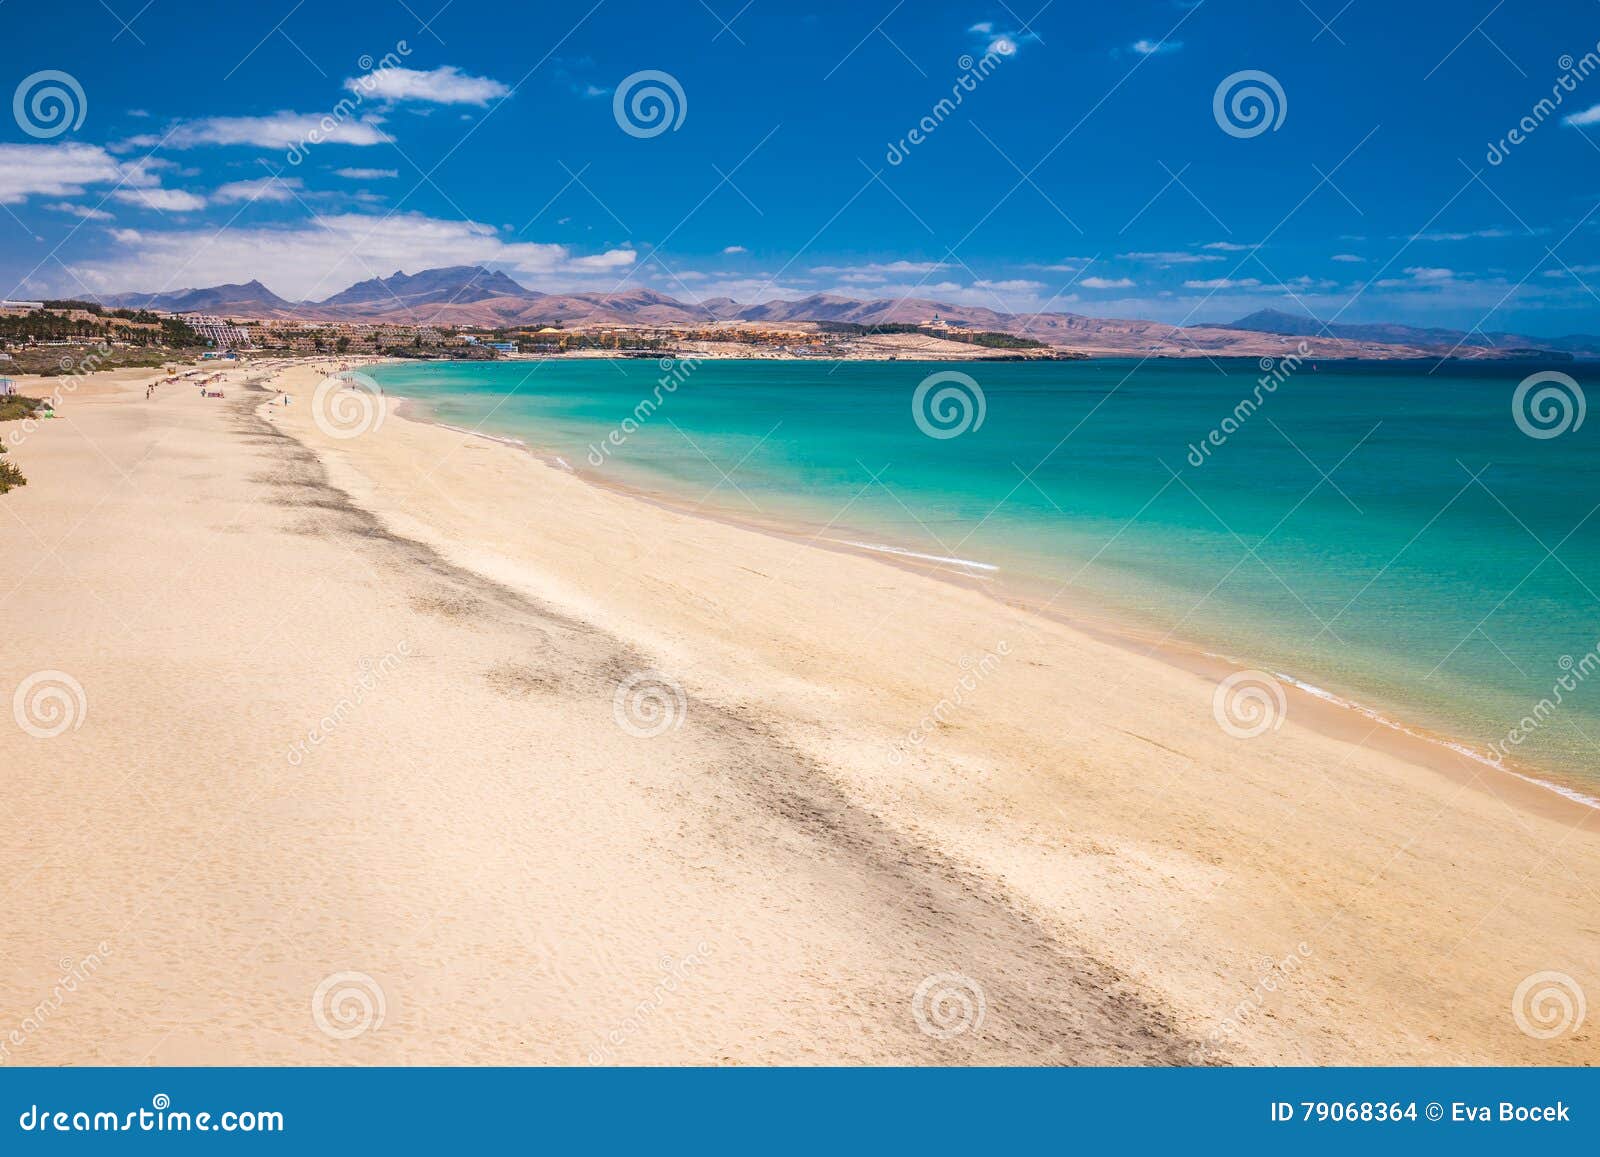 costa calma sandy beach with vulcanic mountains on jandia peninsula, fuerteventura island, canary islands, spain.